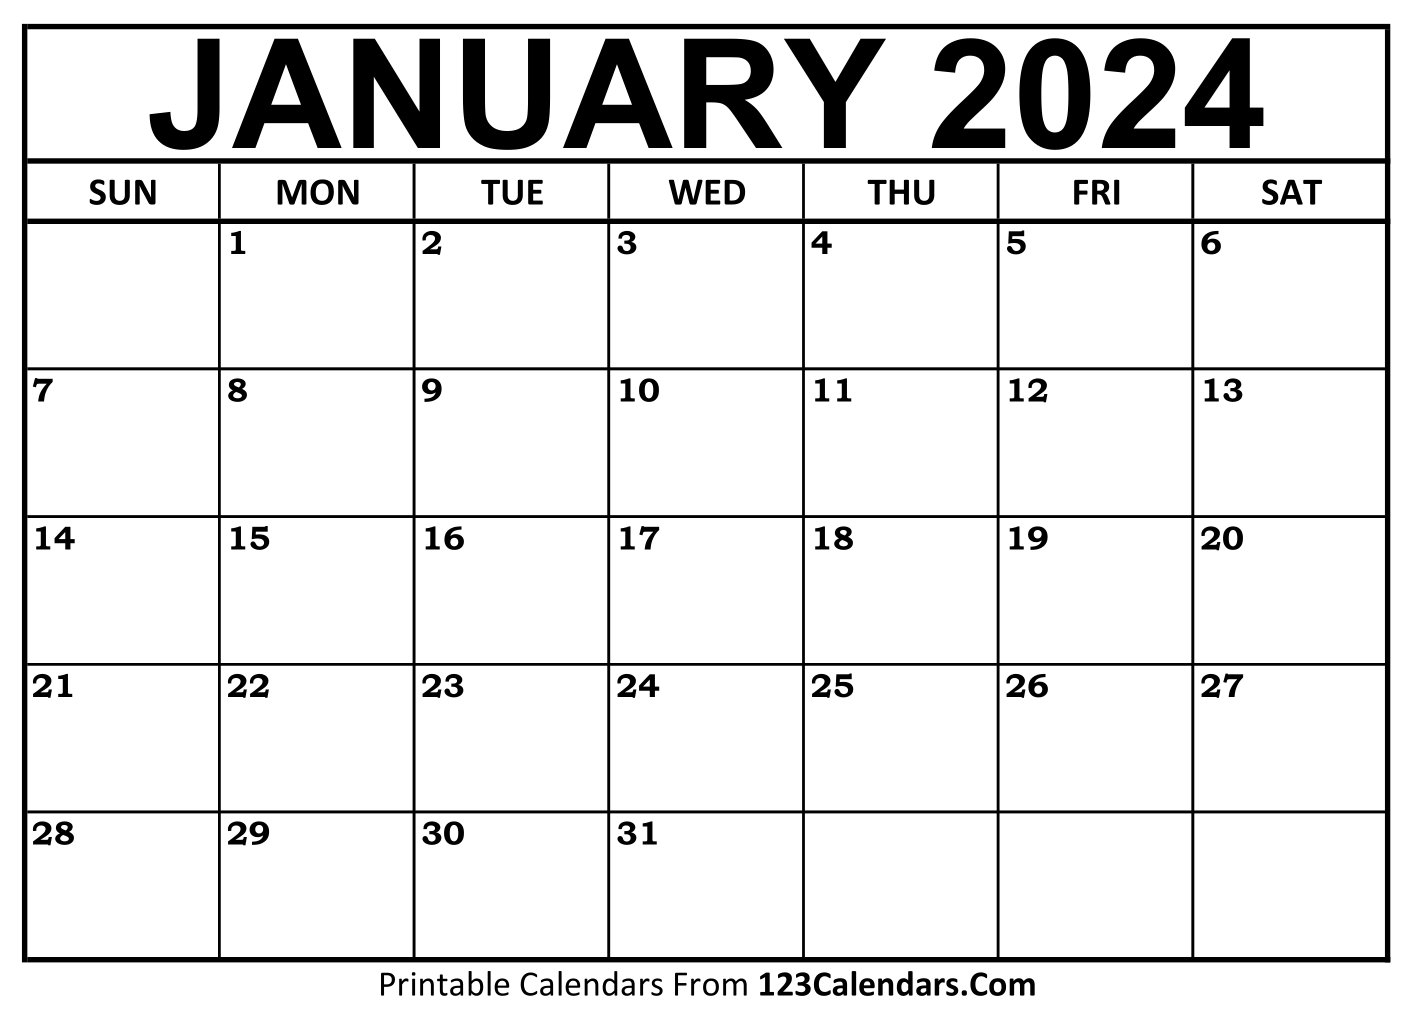 Printable January 2024 Calendar Templates - 123Calendars for January 2024 Calendar Printable Free